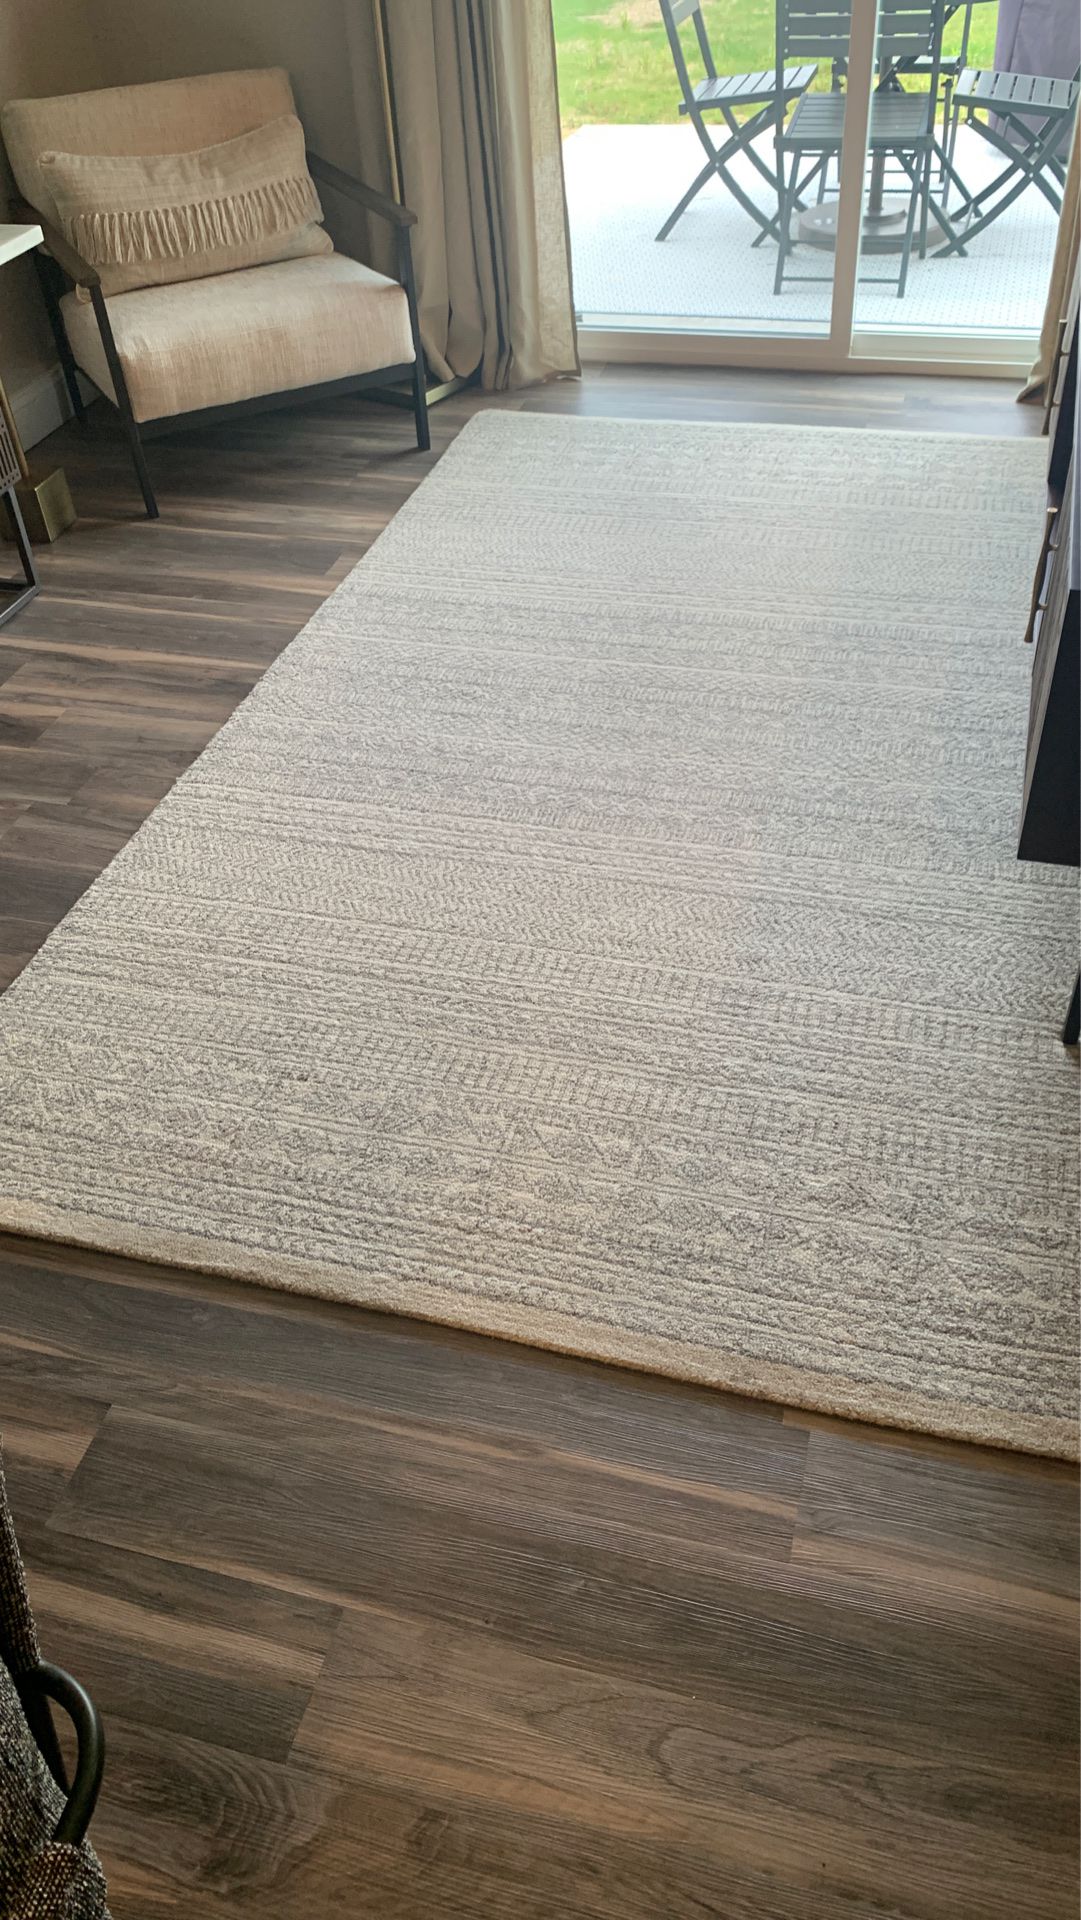 Surya Wool rug with pad (grey taupe) 6x9 rug (brand new)